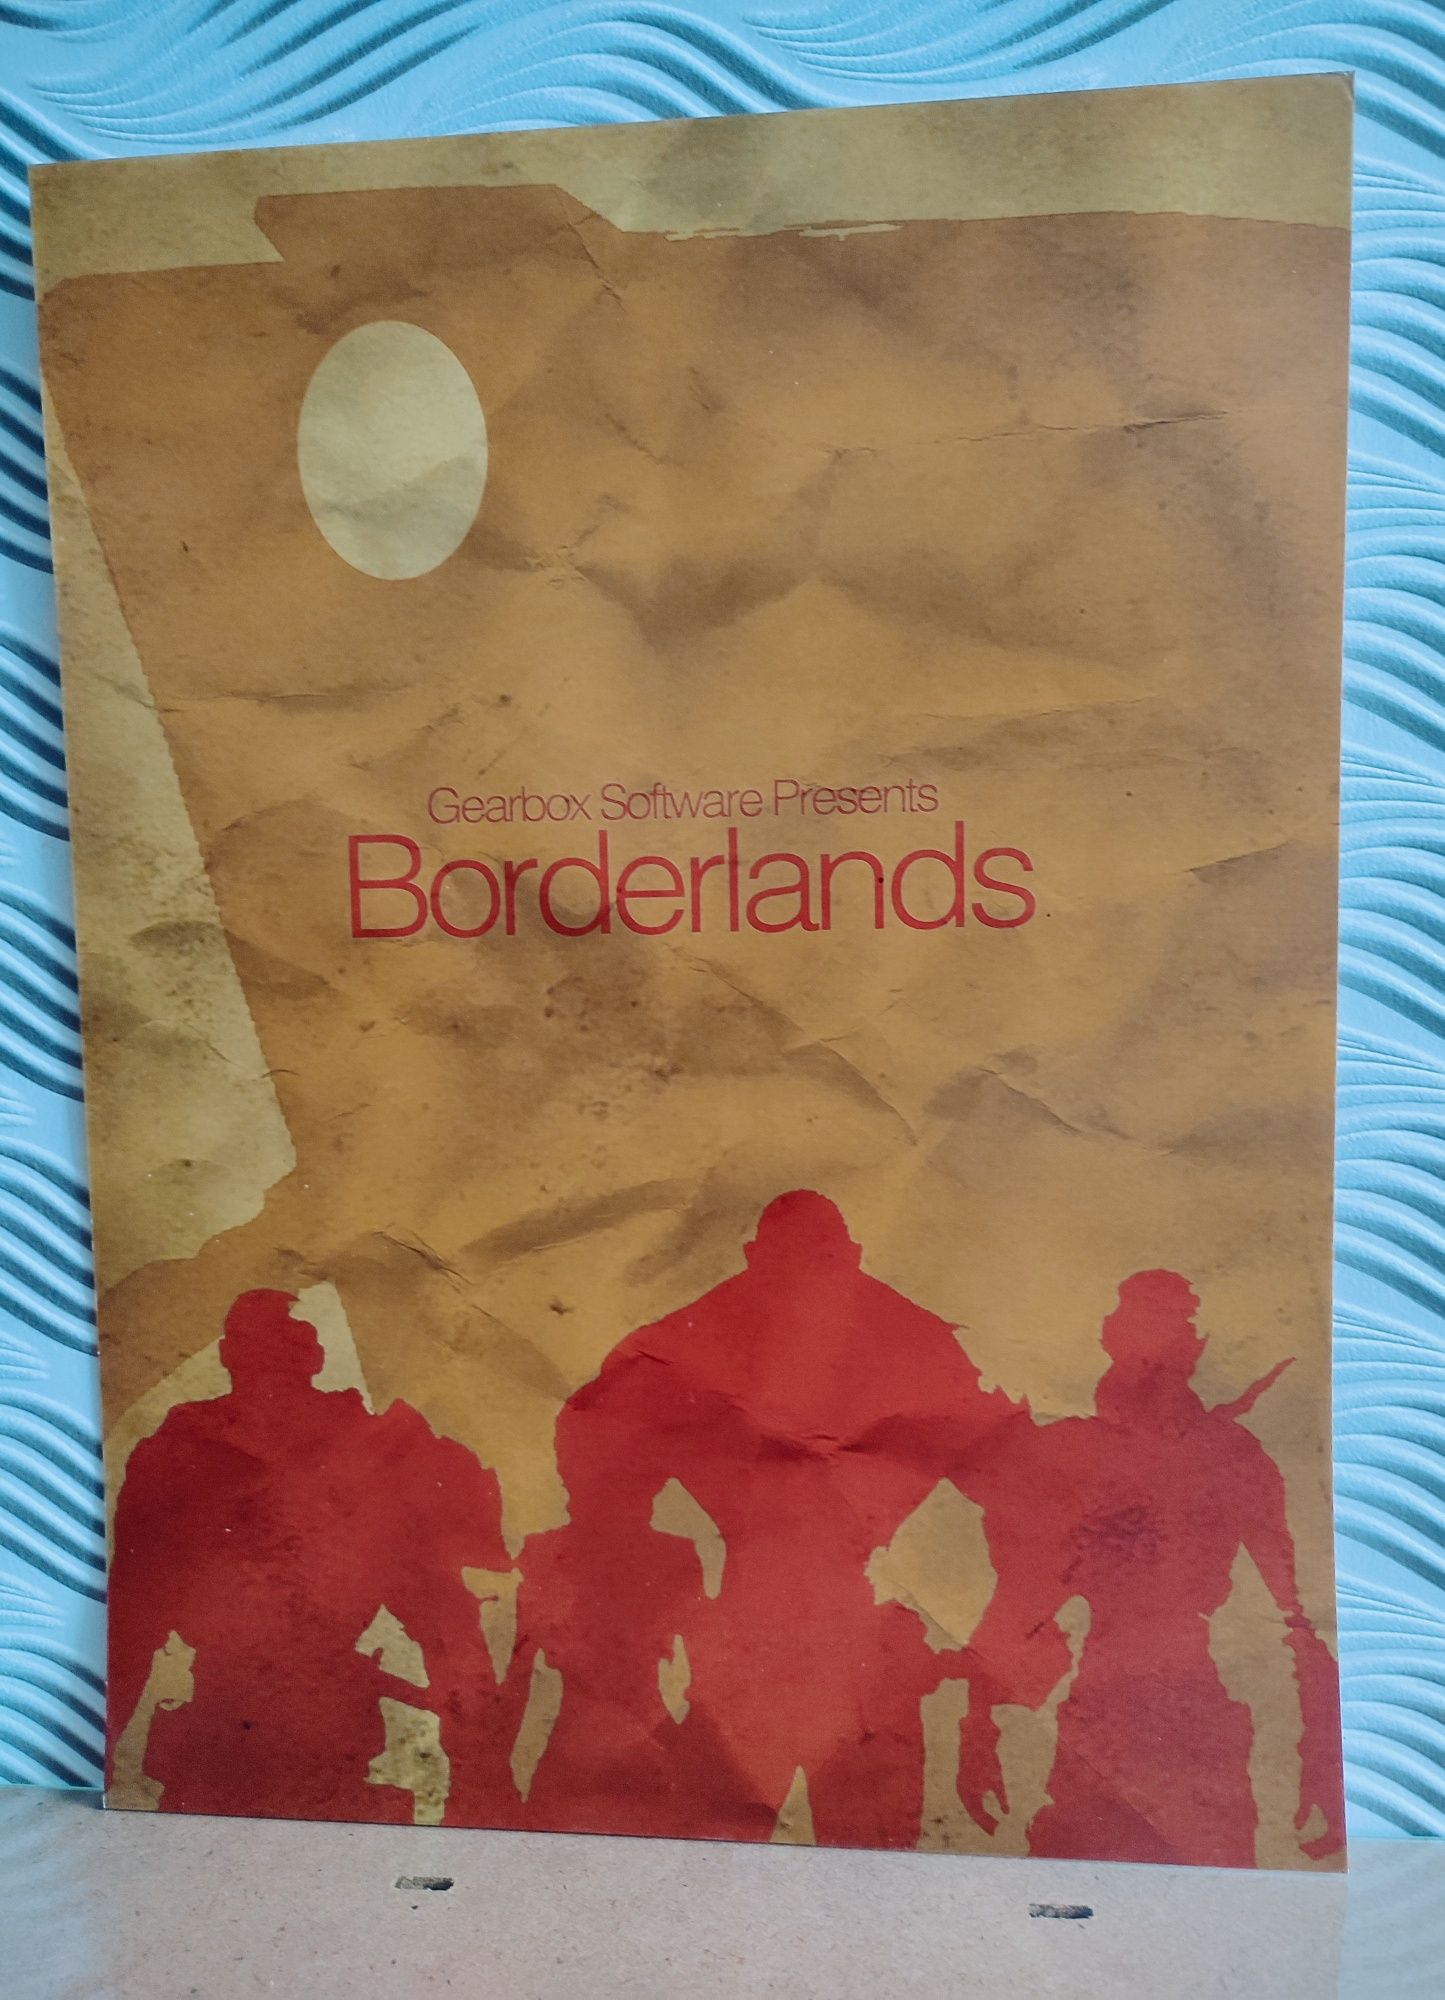 Plakat Borderlands